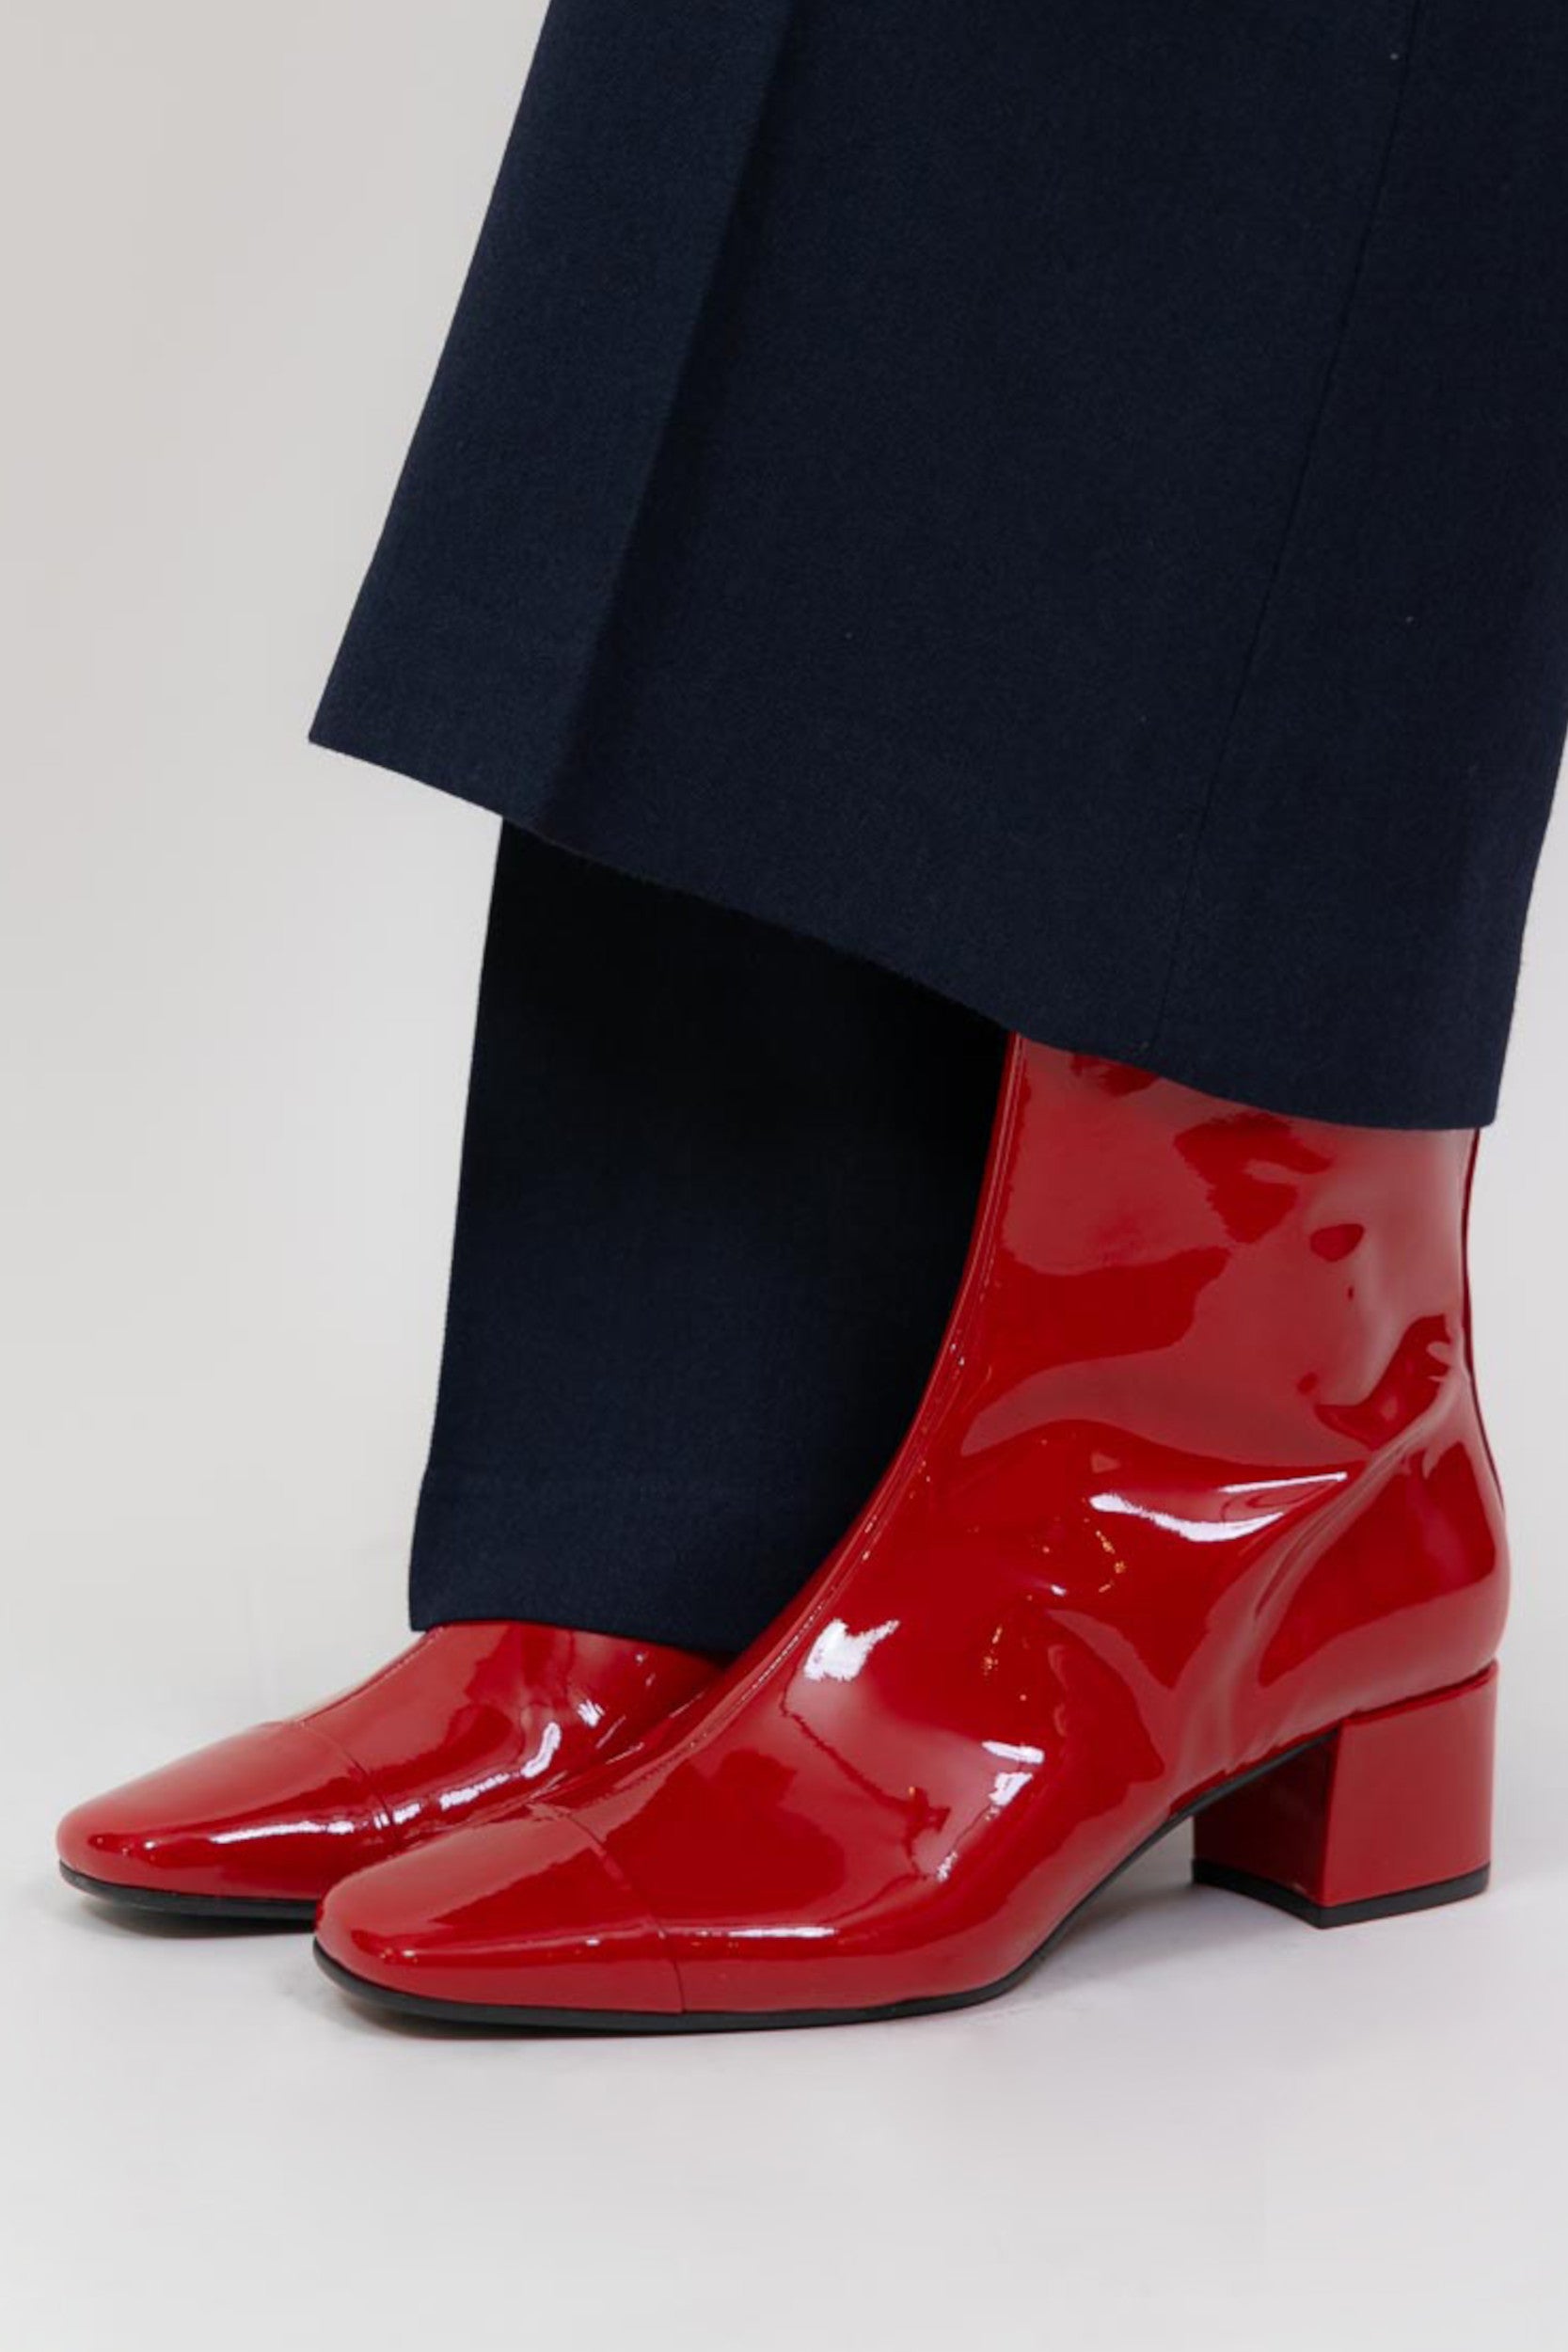 ESTIME black patent leather ankle boots